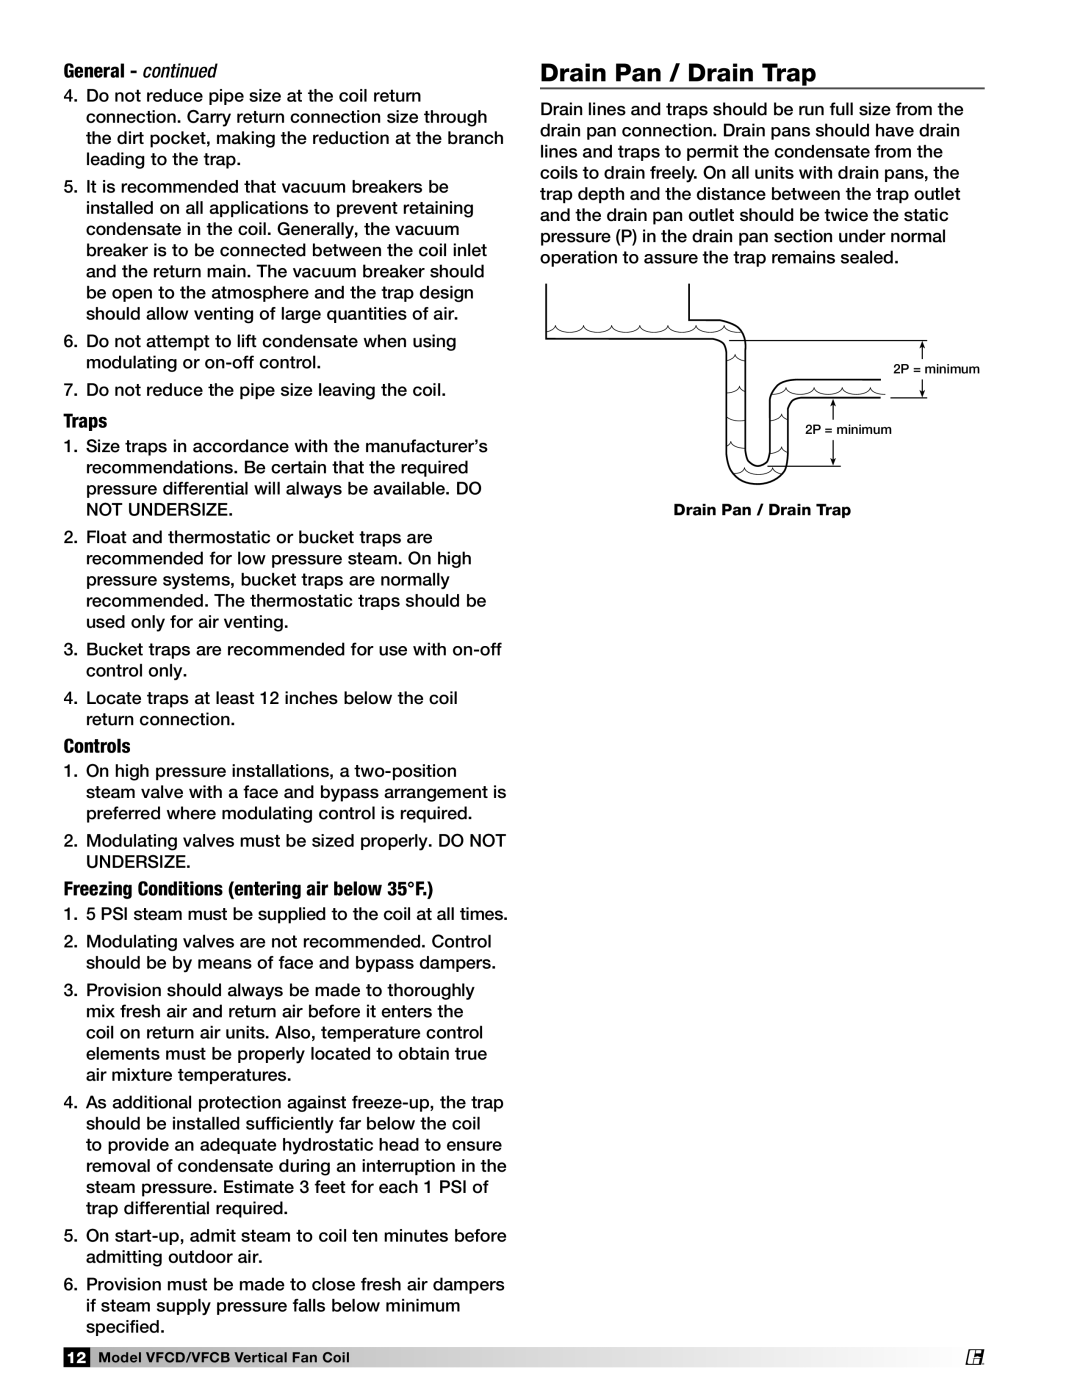 Greenheck Fan 464696 manual Drain Pan / Drain Trap, General - continued, Traps, Controls 